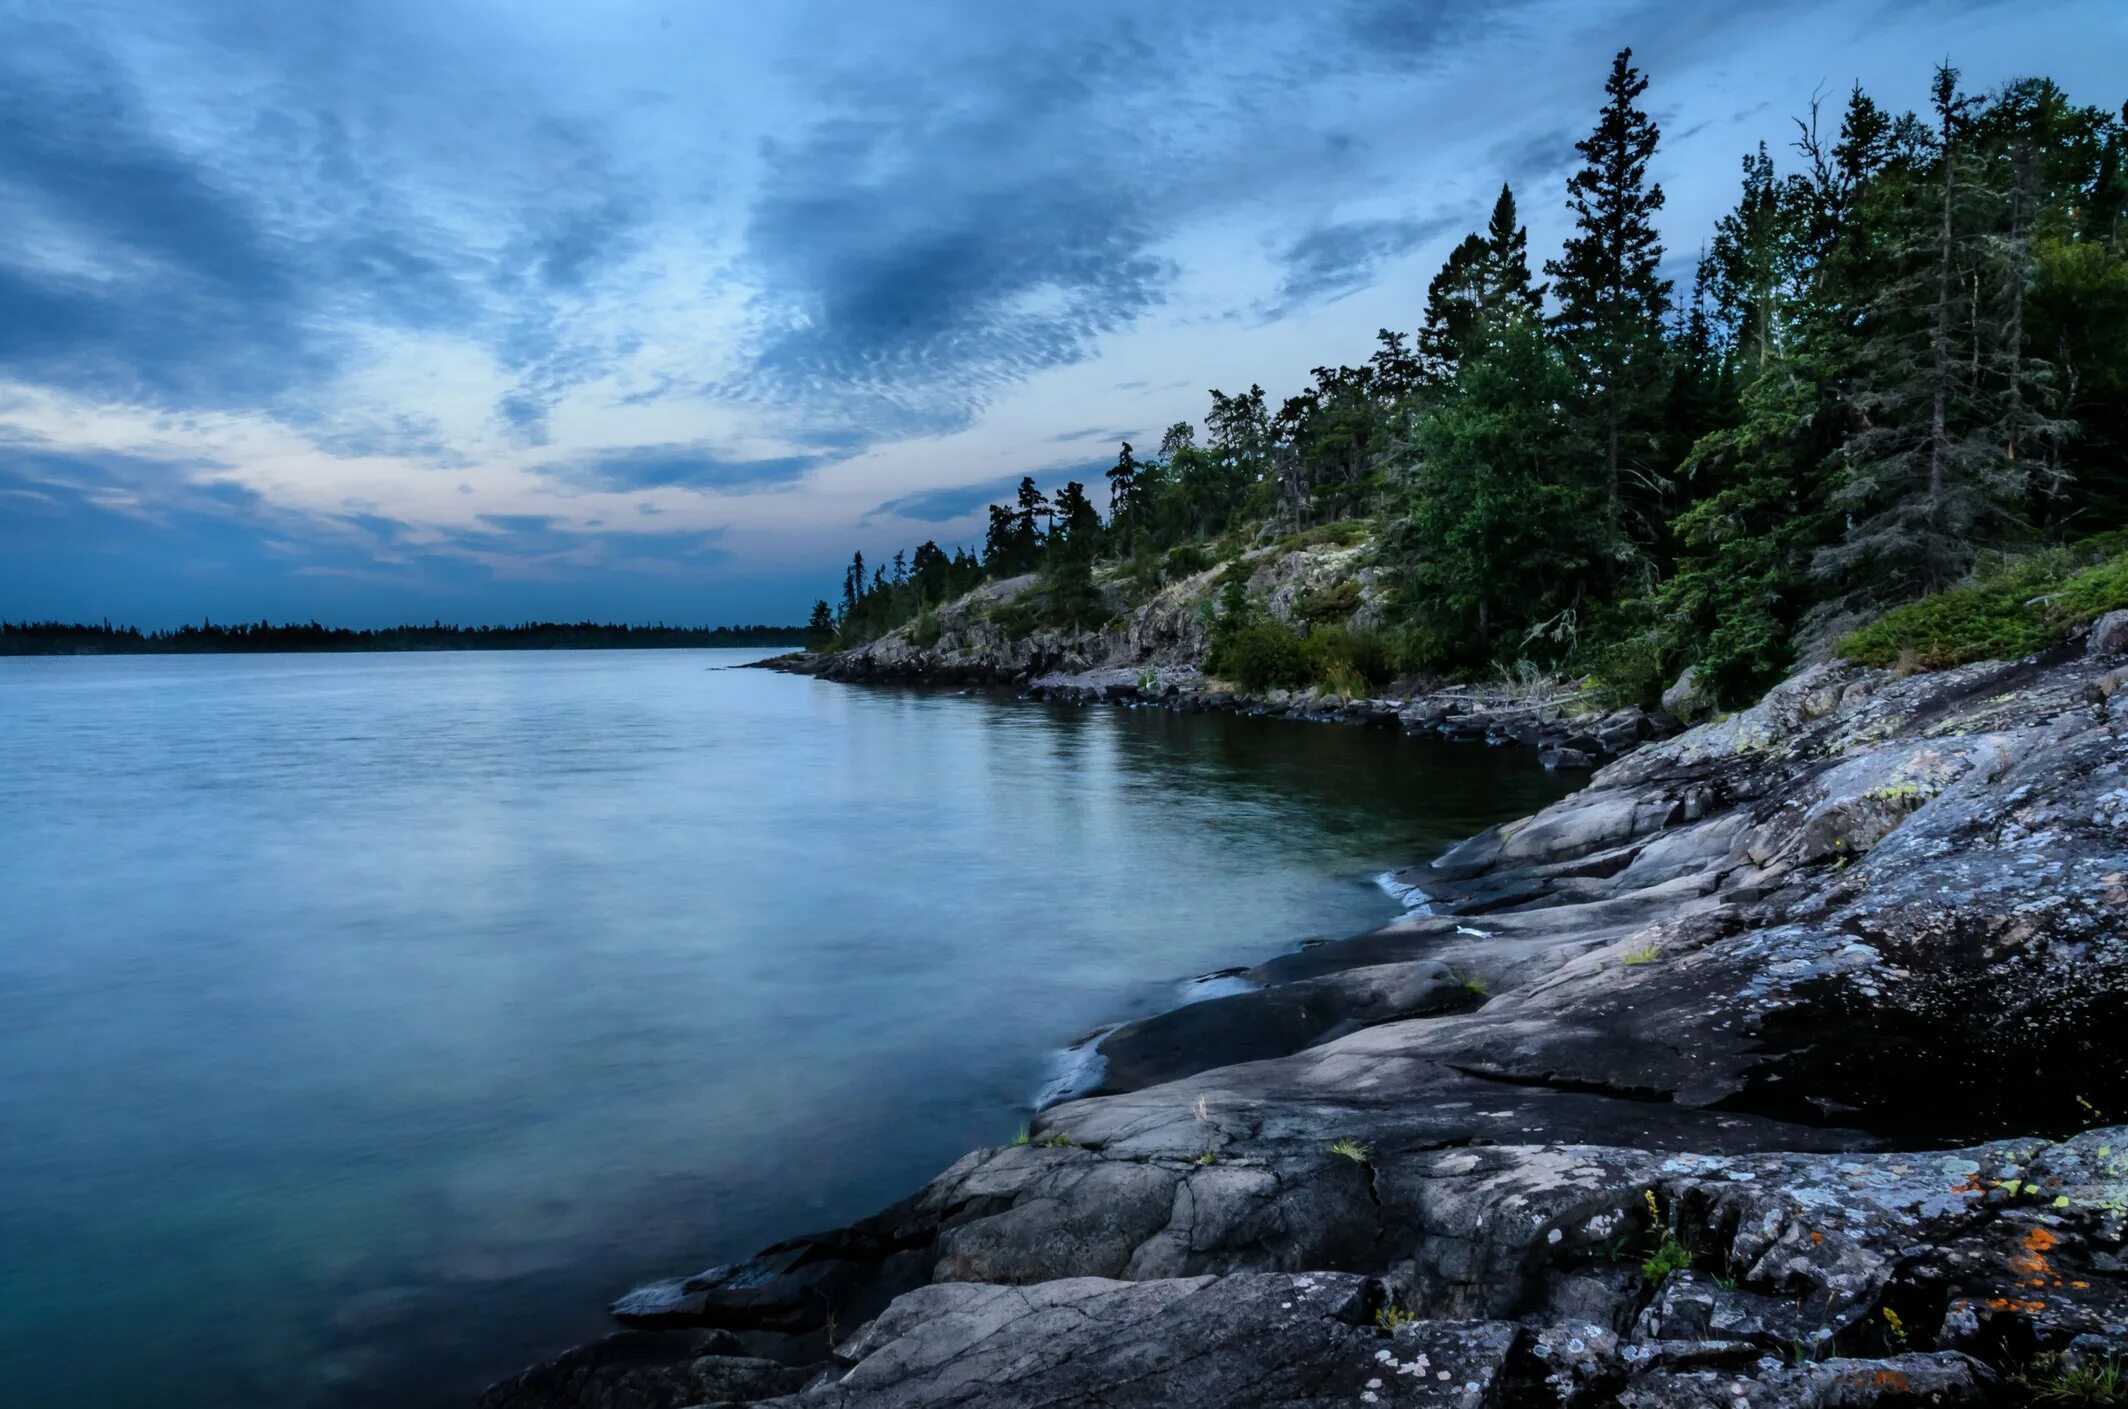 Верхнее озеро (Lake Superior). Канада. Озеро сьюпериор Канада. Великие американские озёра верхнее Гурон Мичиган Эри Онтарио. Озеро Онтарио Северная Америка. Великое озеро на границе сша и канады